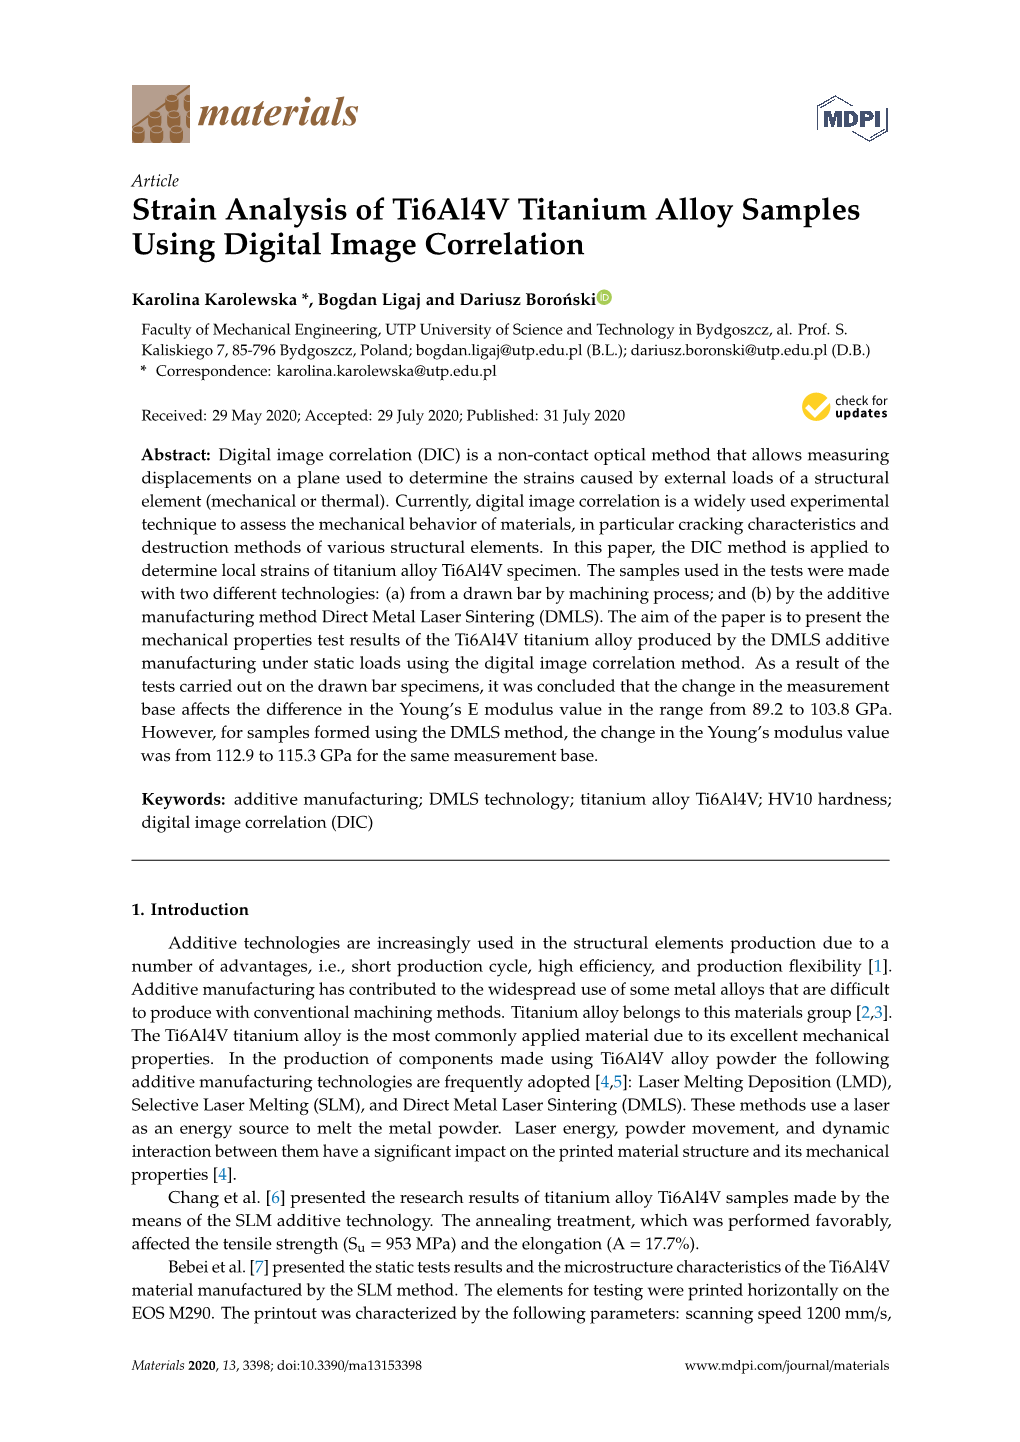 Strain Analysis of Ti6al4v Titanium Alloy Samples Using Digital Image Correlation